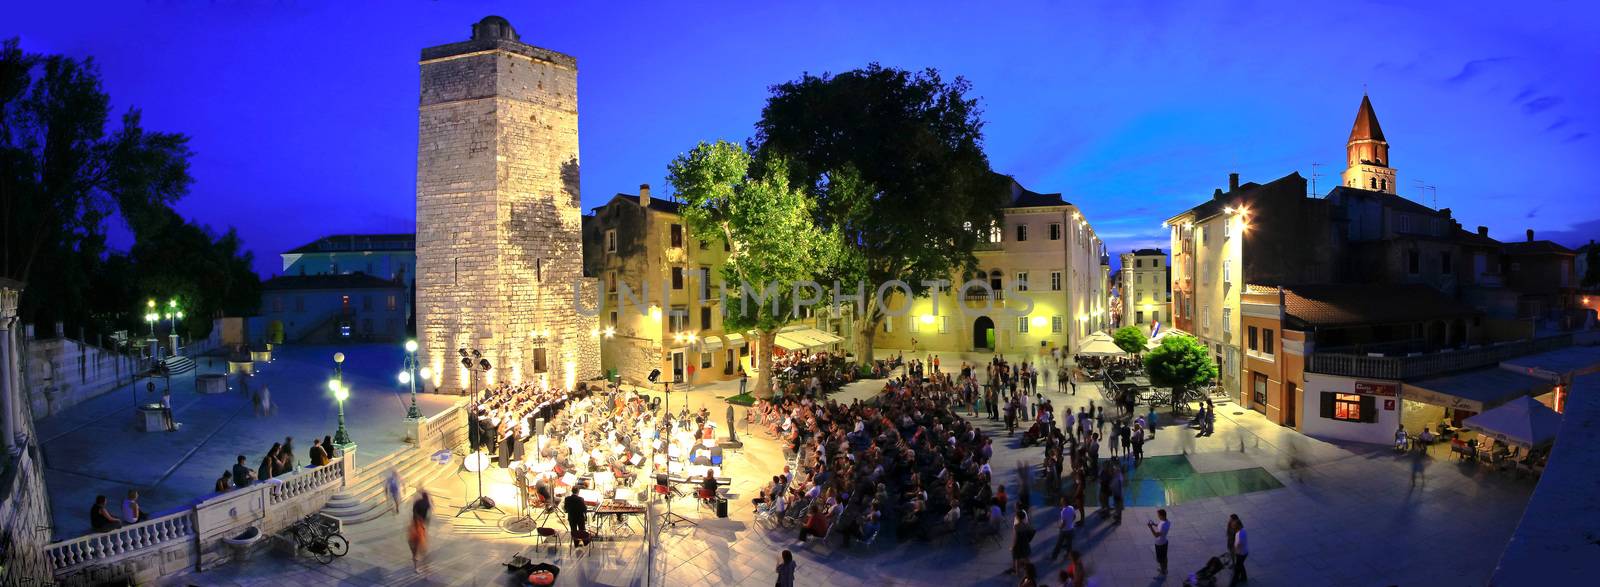 ZADAR, CROATIA - June 14 - Five wells square in Zadar, Croatia - open air Carmina Burana performance by croatian military forces symphony and Kolo singing society, taken on June 14 2014.